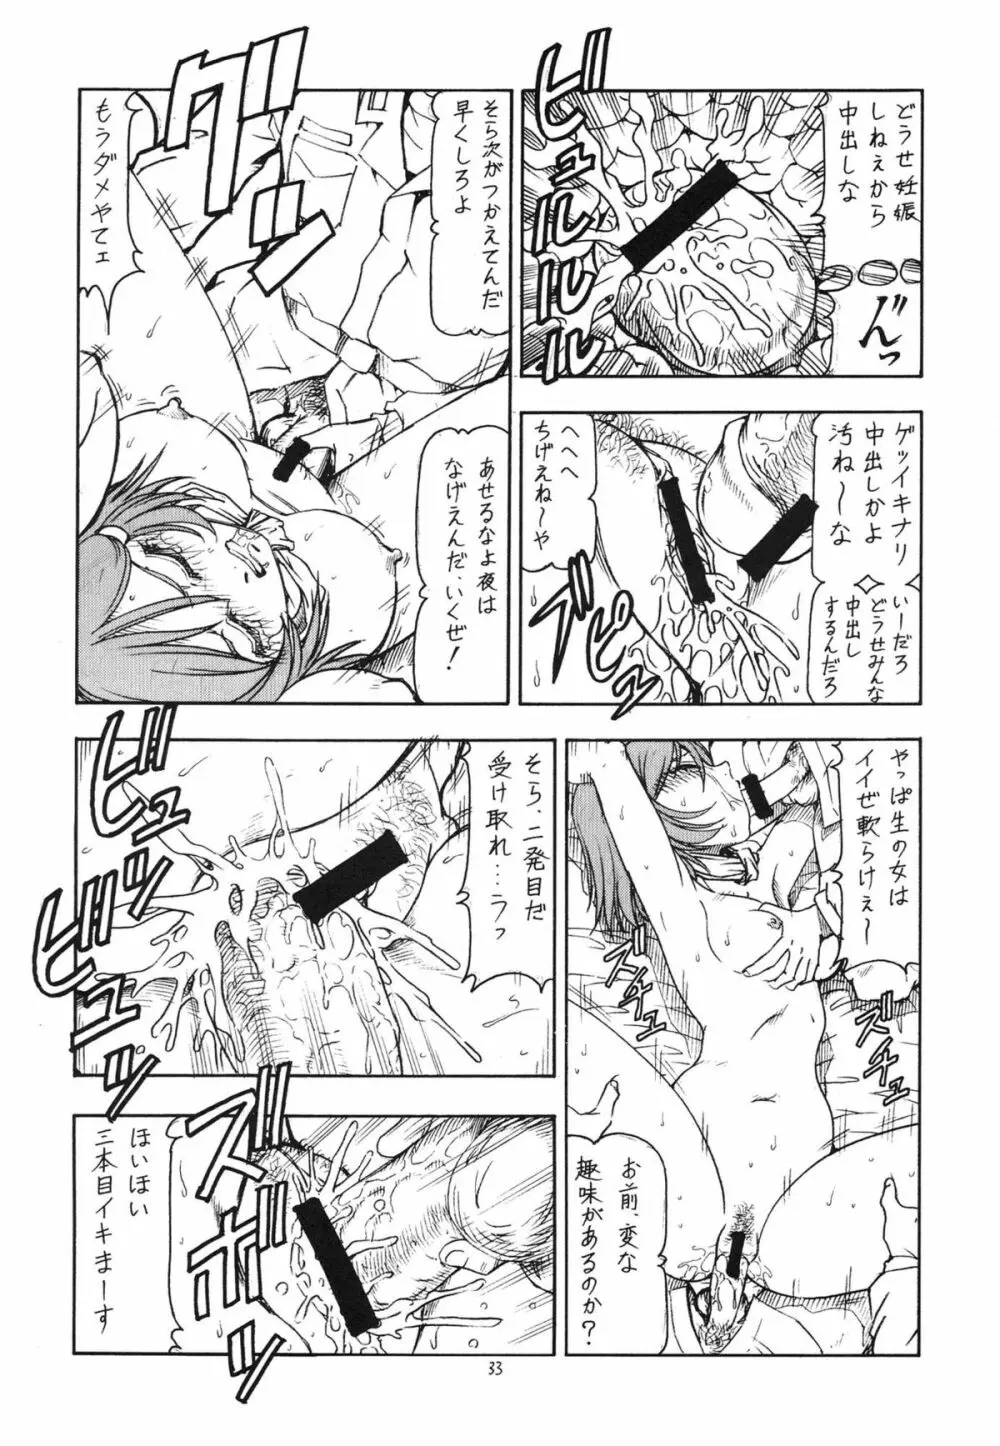 GPM.XXX ANIMATION 萌葱色の涙 TEAR DROPS 35ページ